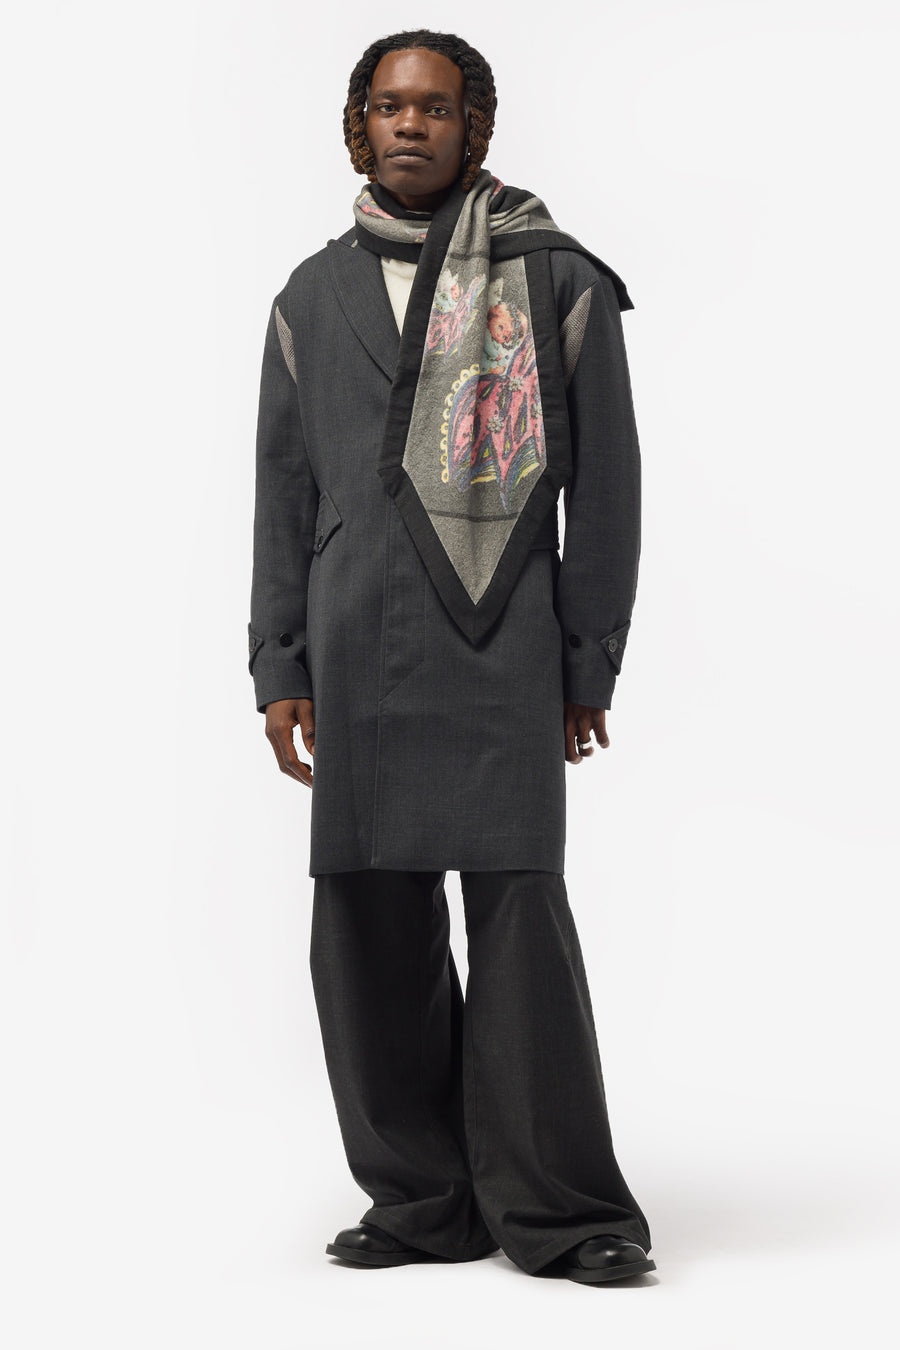 Kiko Kostadinov Meno Trousers in Charcoal Grey | notreshop | REVERSIBLE